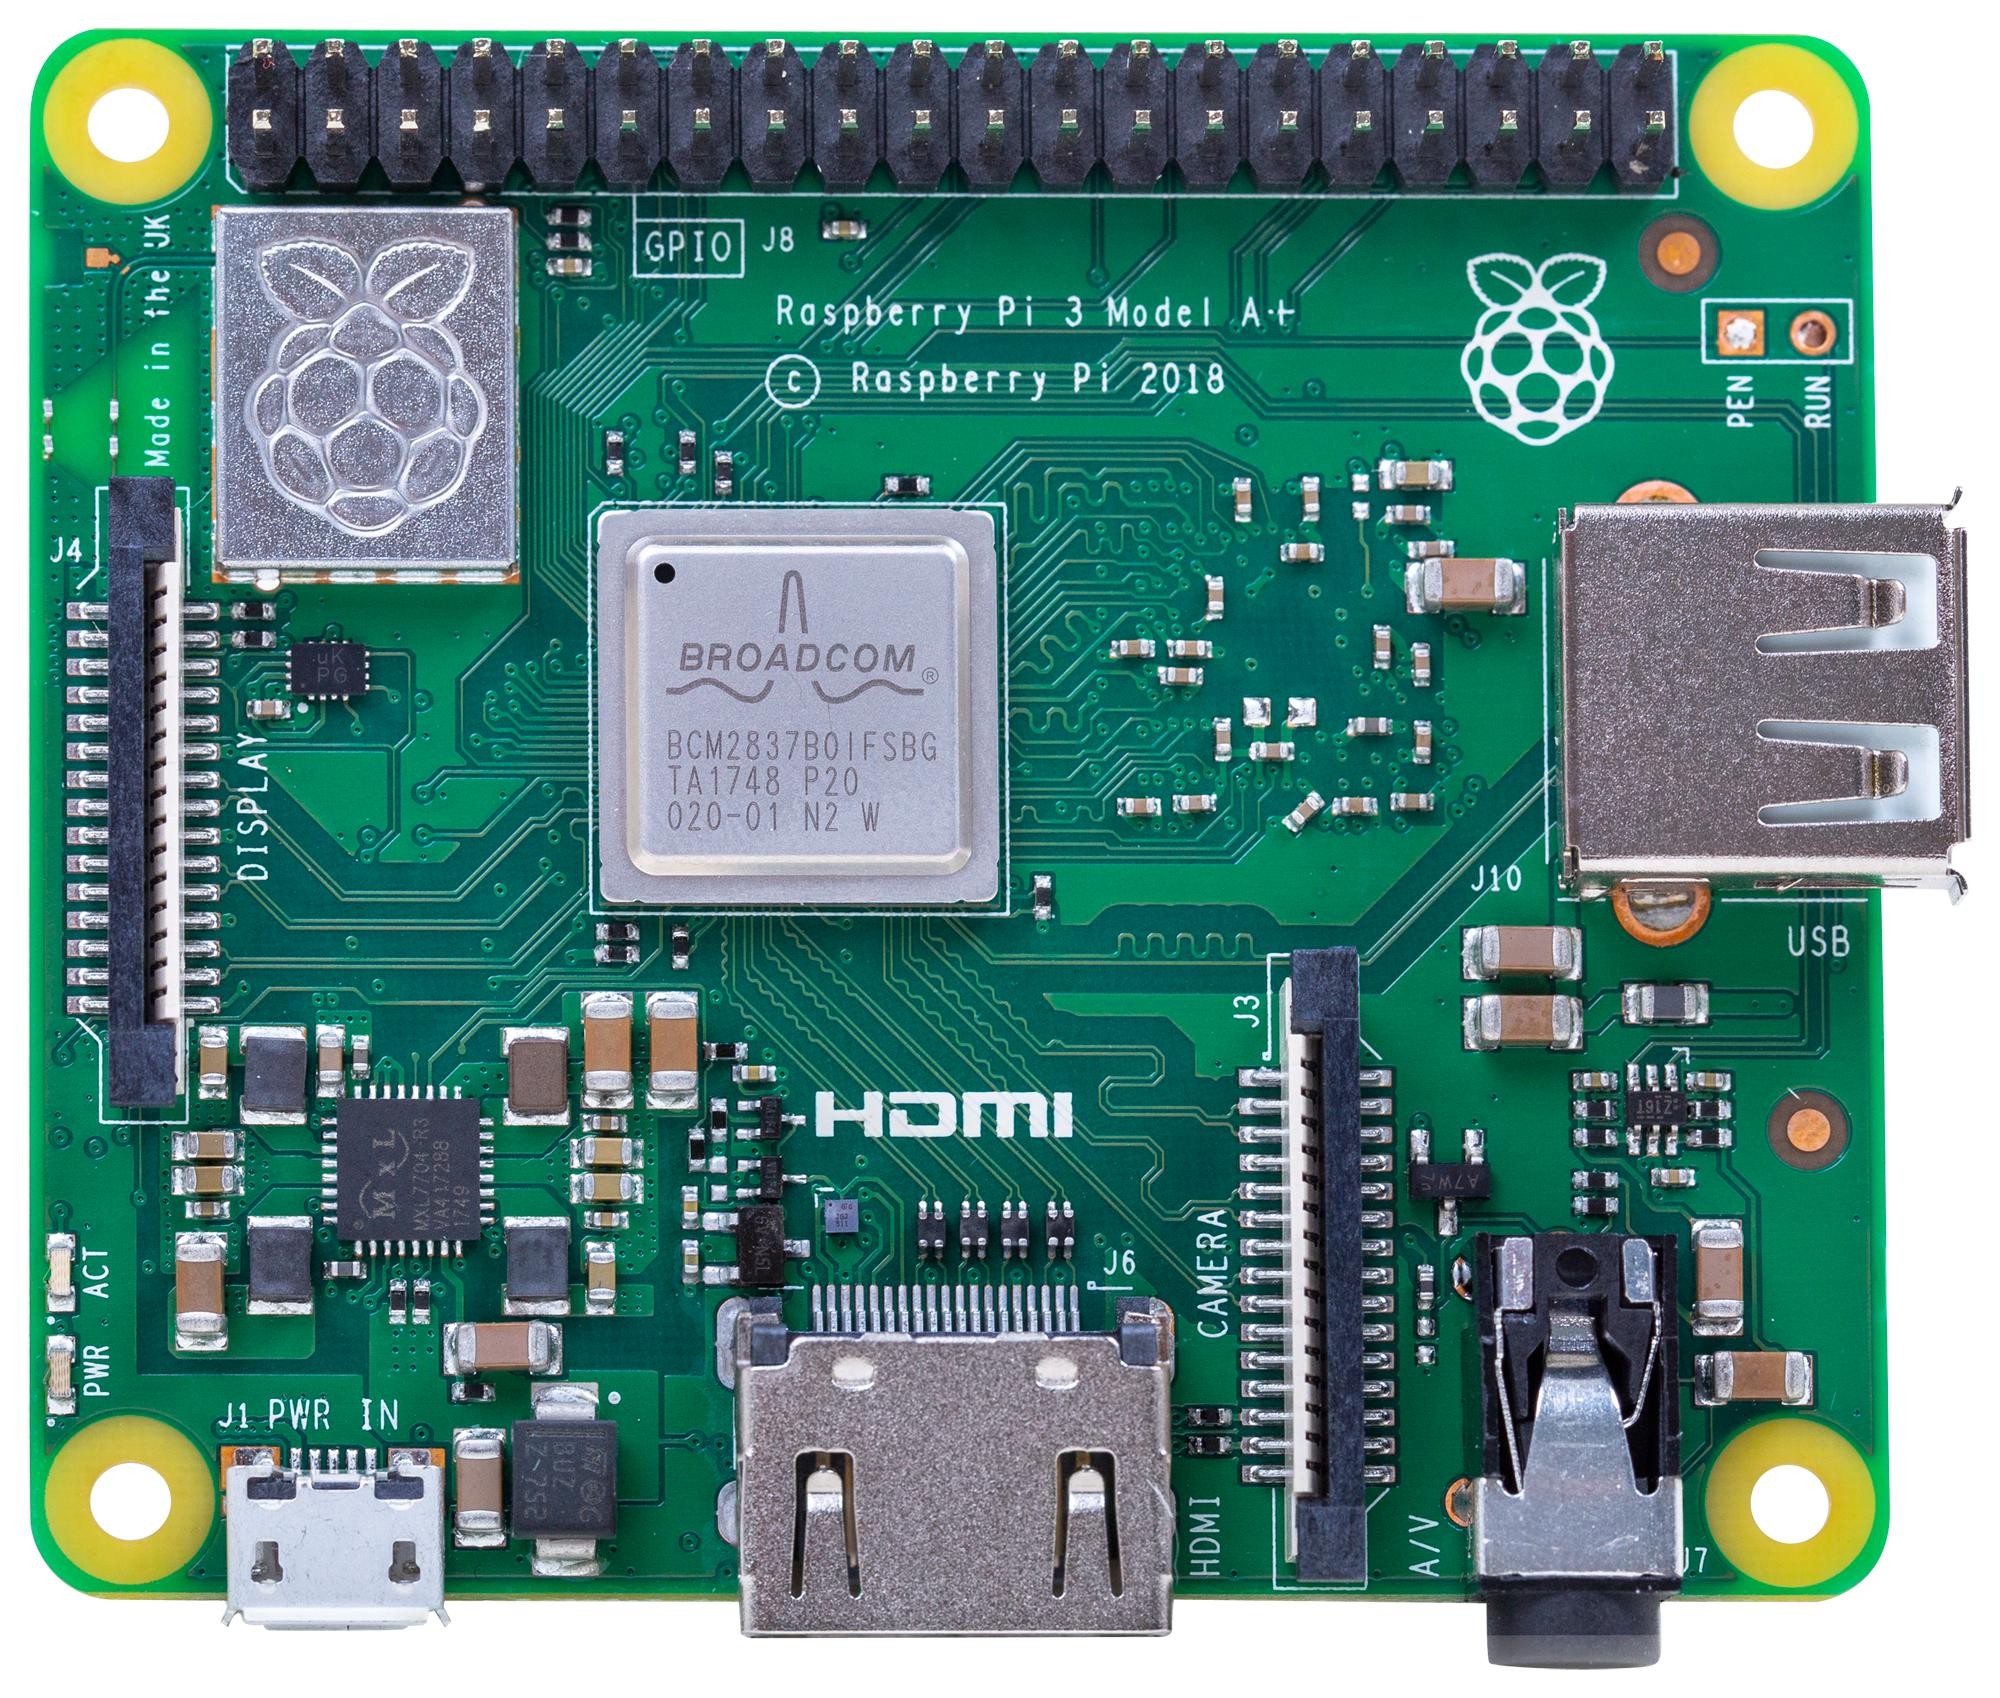 RPI3-MODAP - Single Board Computer, Raspberry Pi 3 Model A+, BCM2837B0 SoC, Dual-Band WiFi, IoT